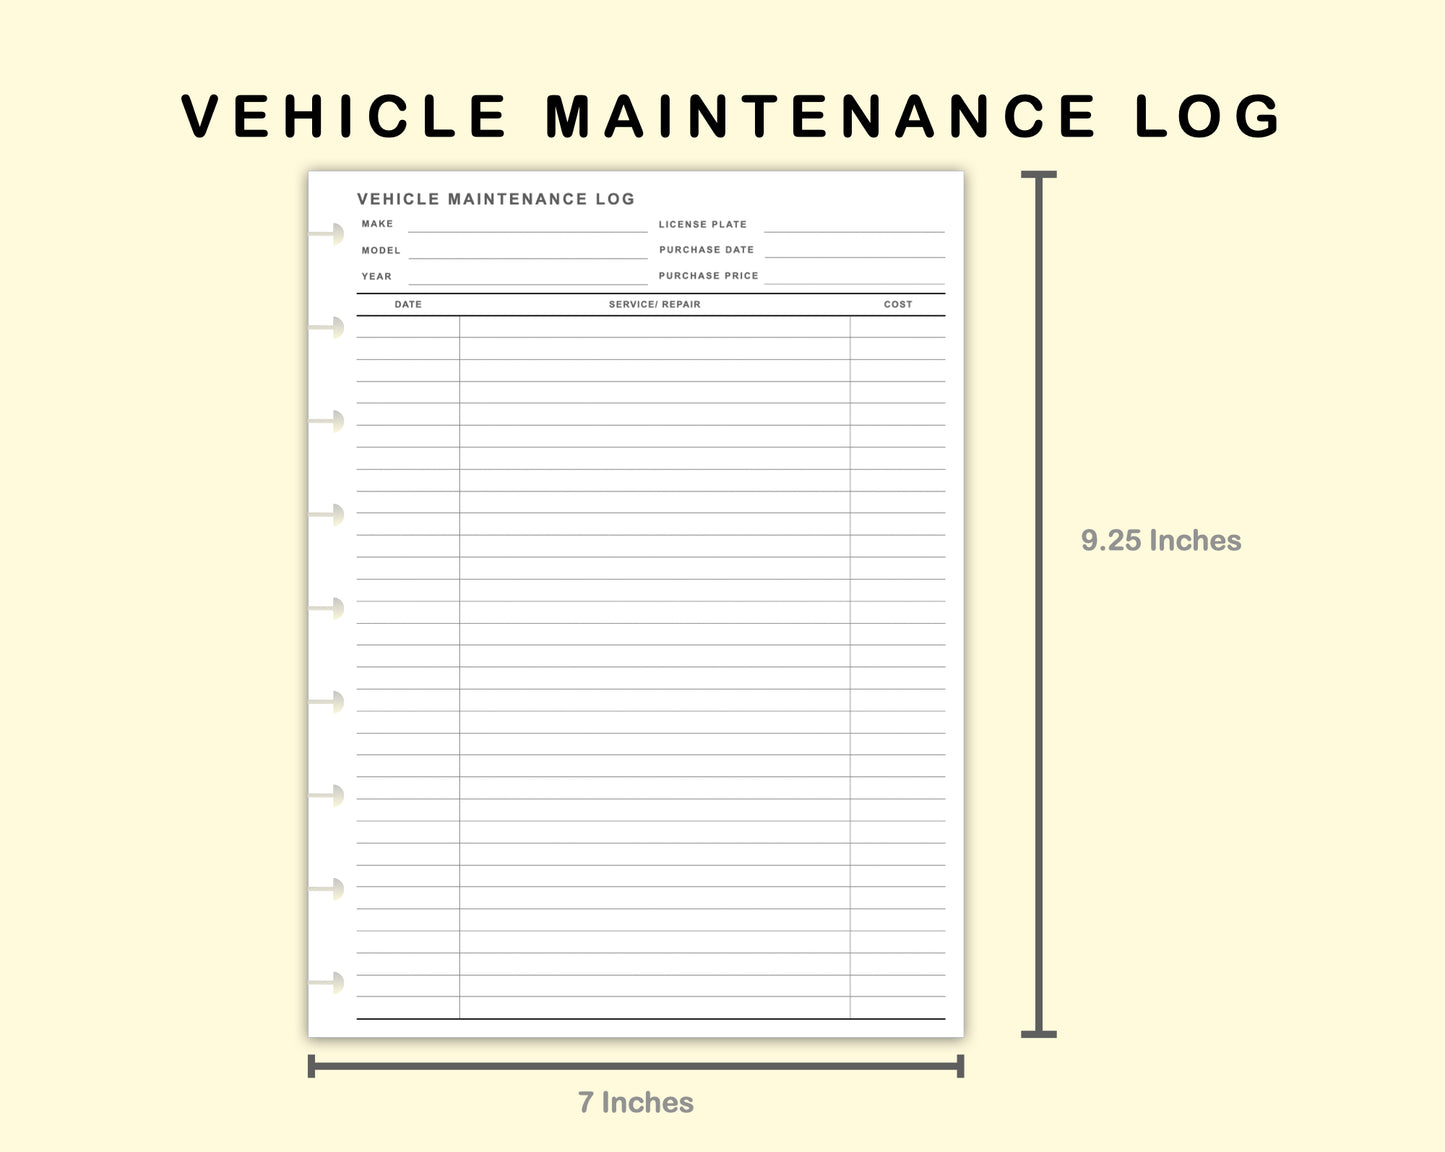 Classic HP Inserts - Vehicle Maintenance Log